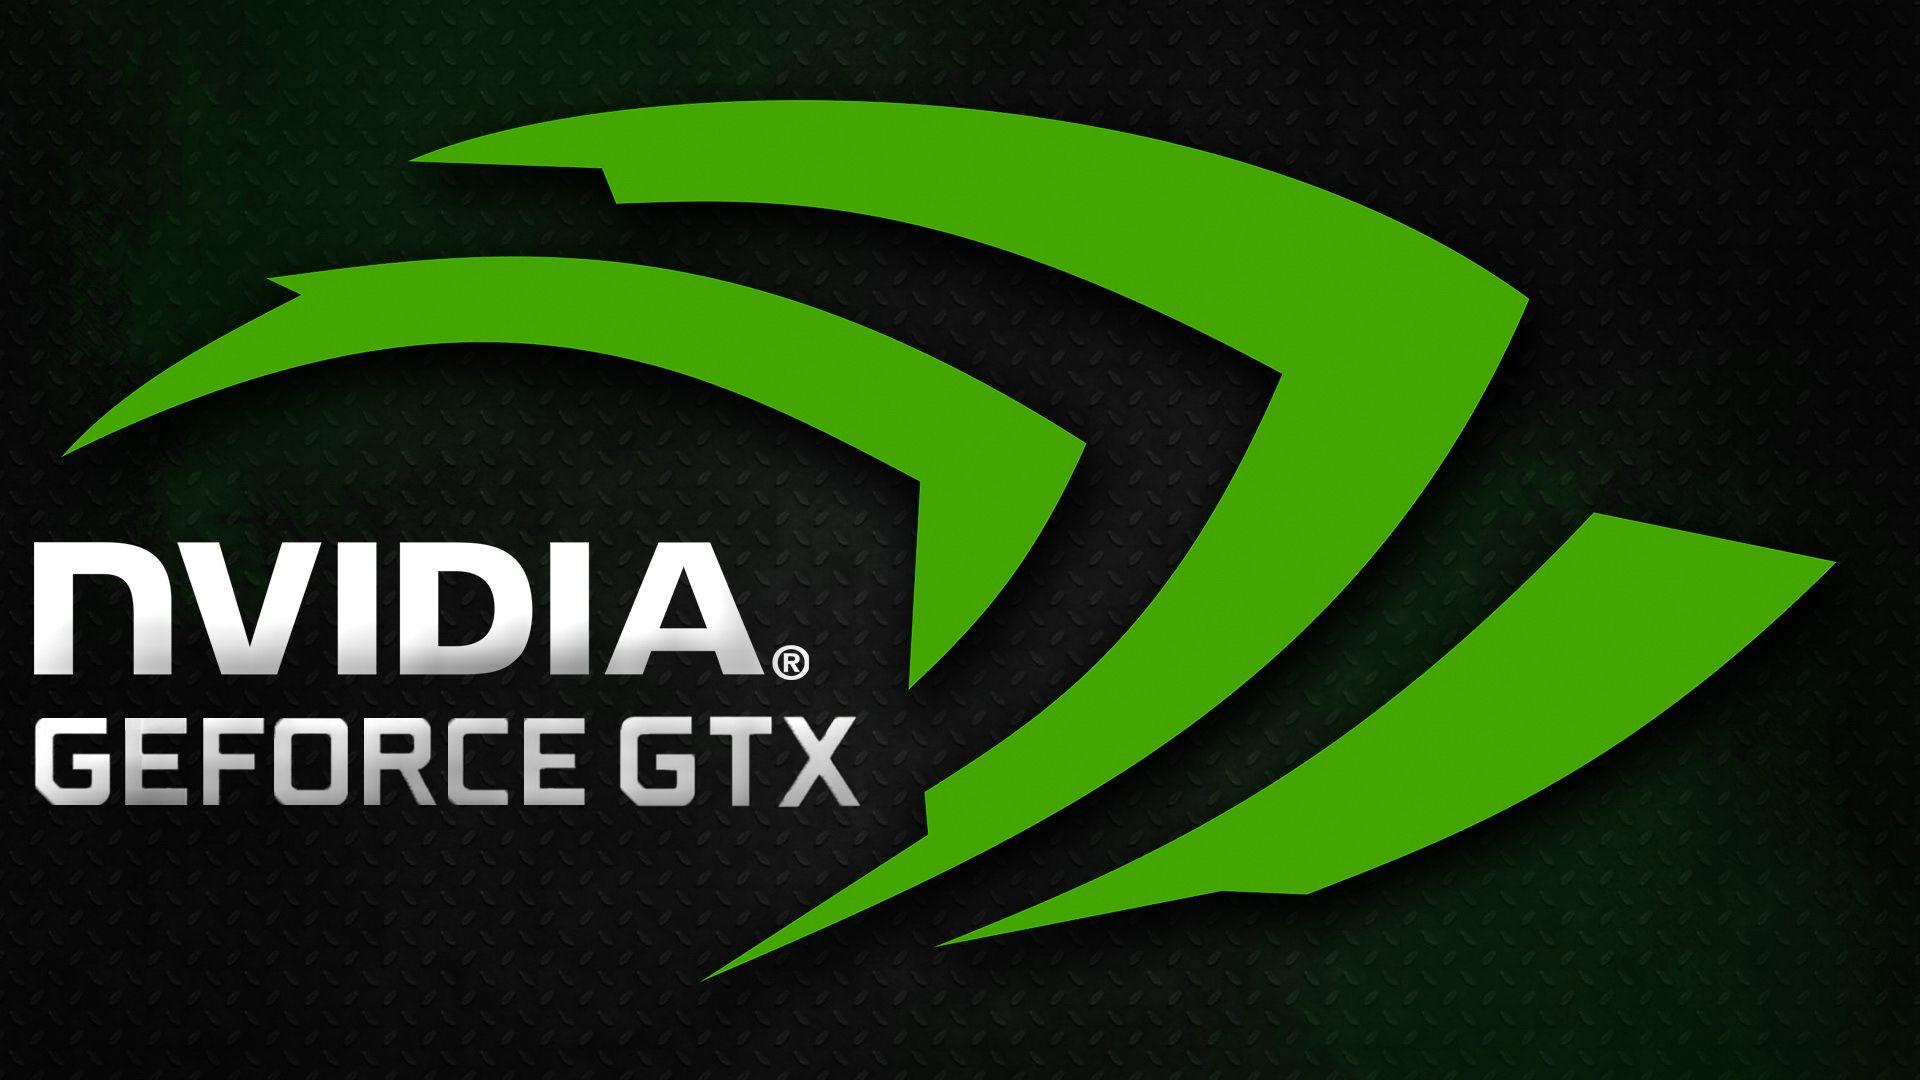 NVIDIA GTX Logo - Nvidia Geforce GTX Logo